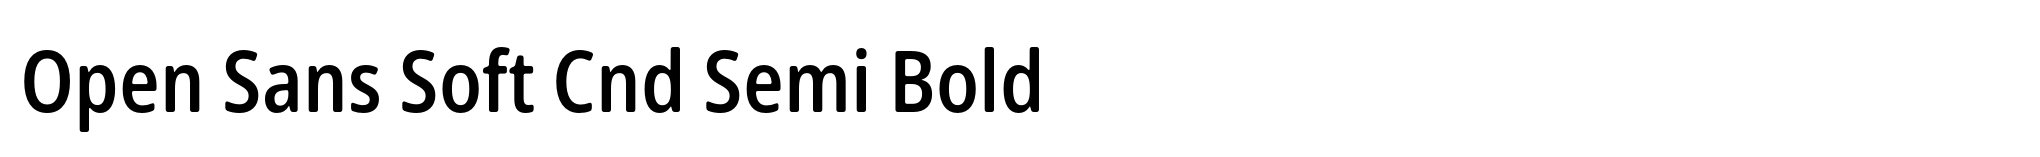 Open Sans Soft Cnd Semi Bold image